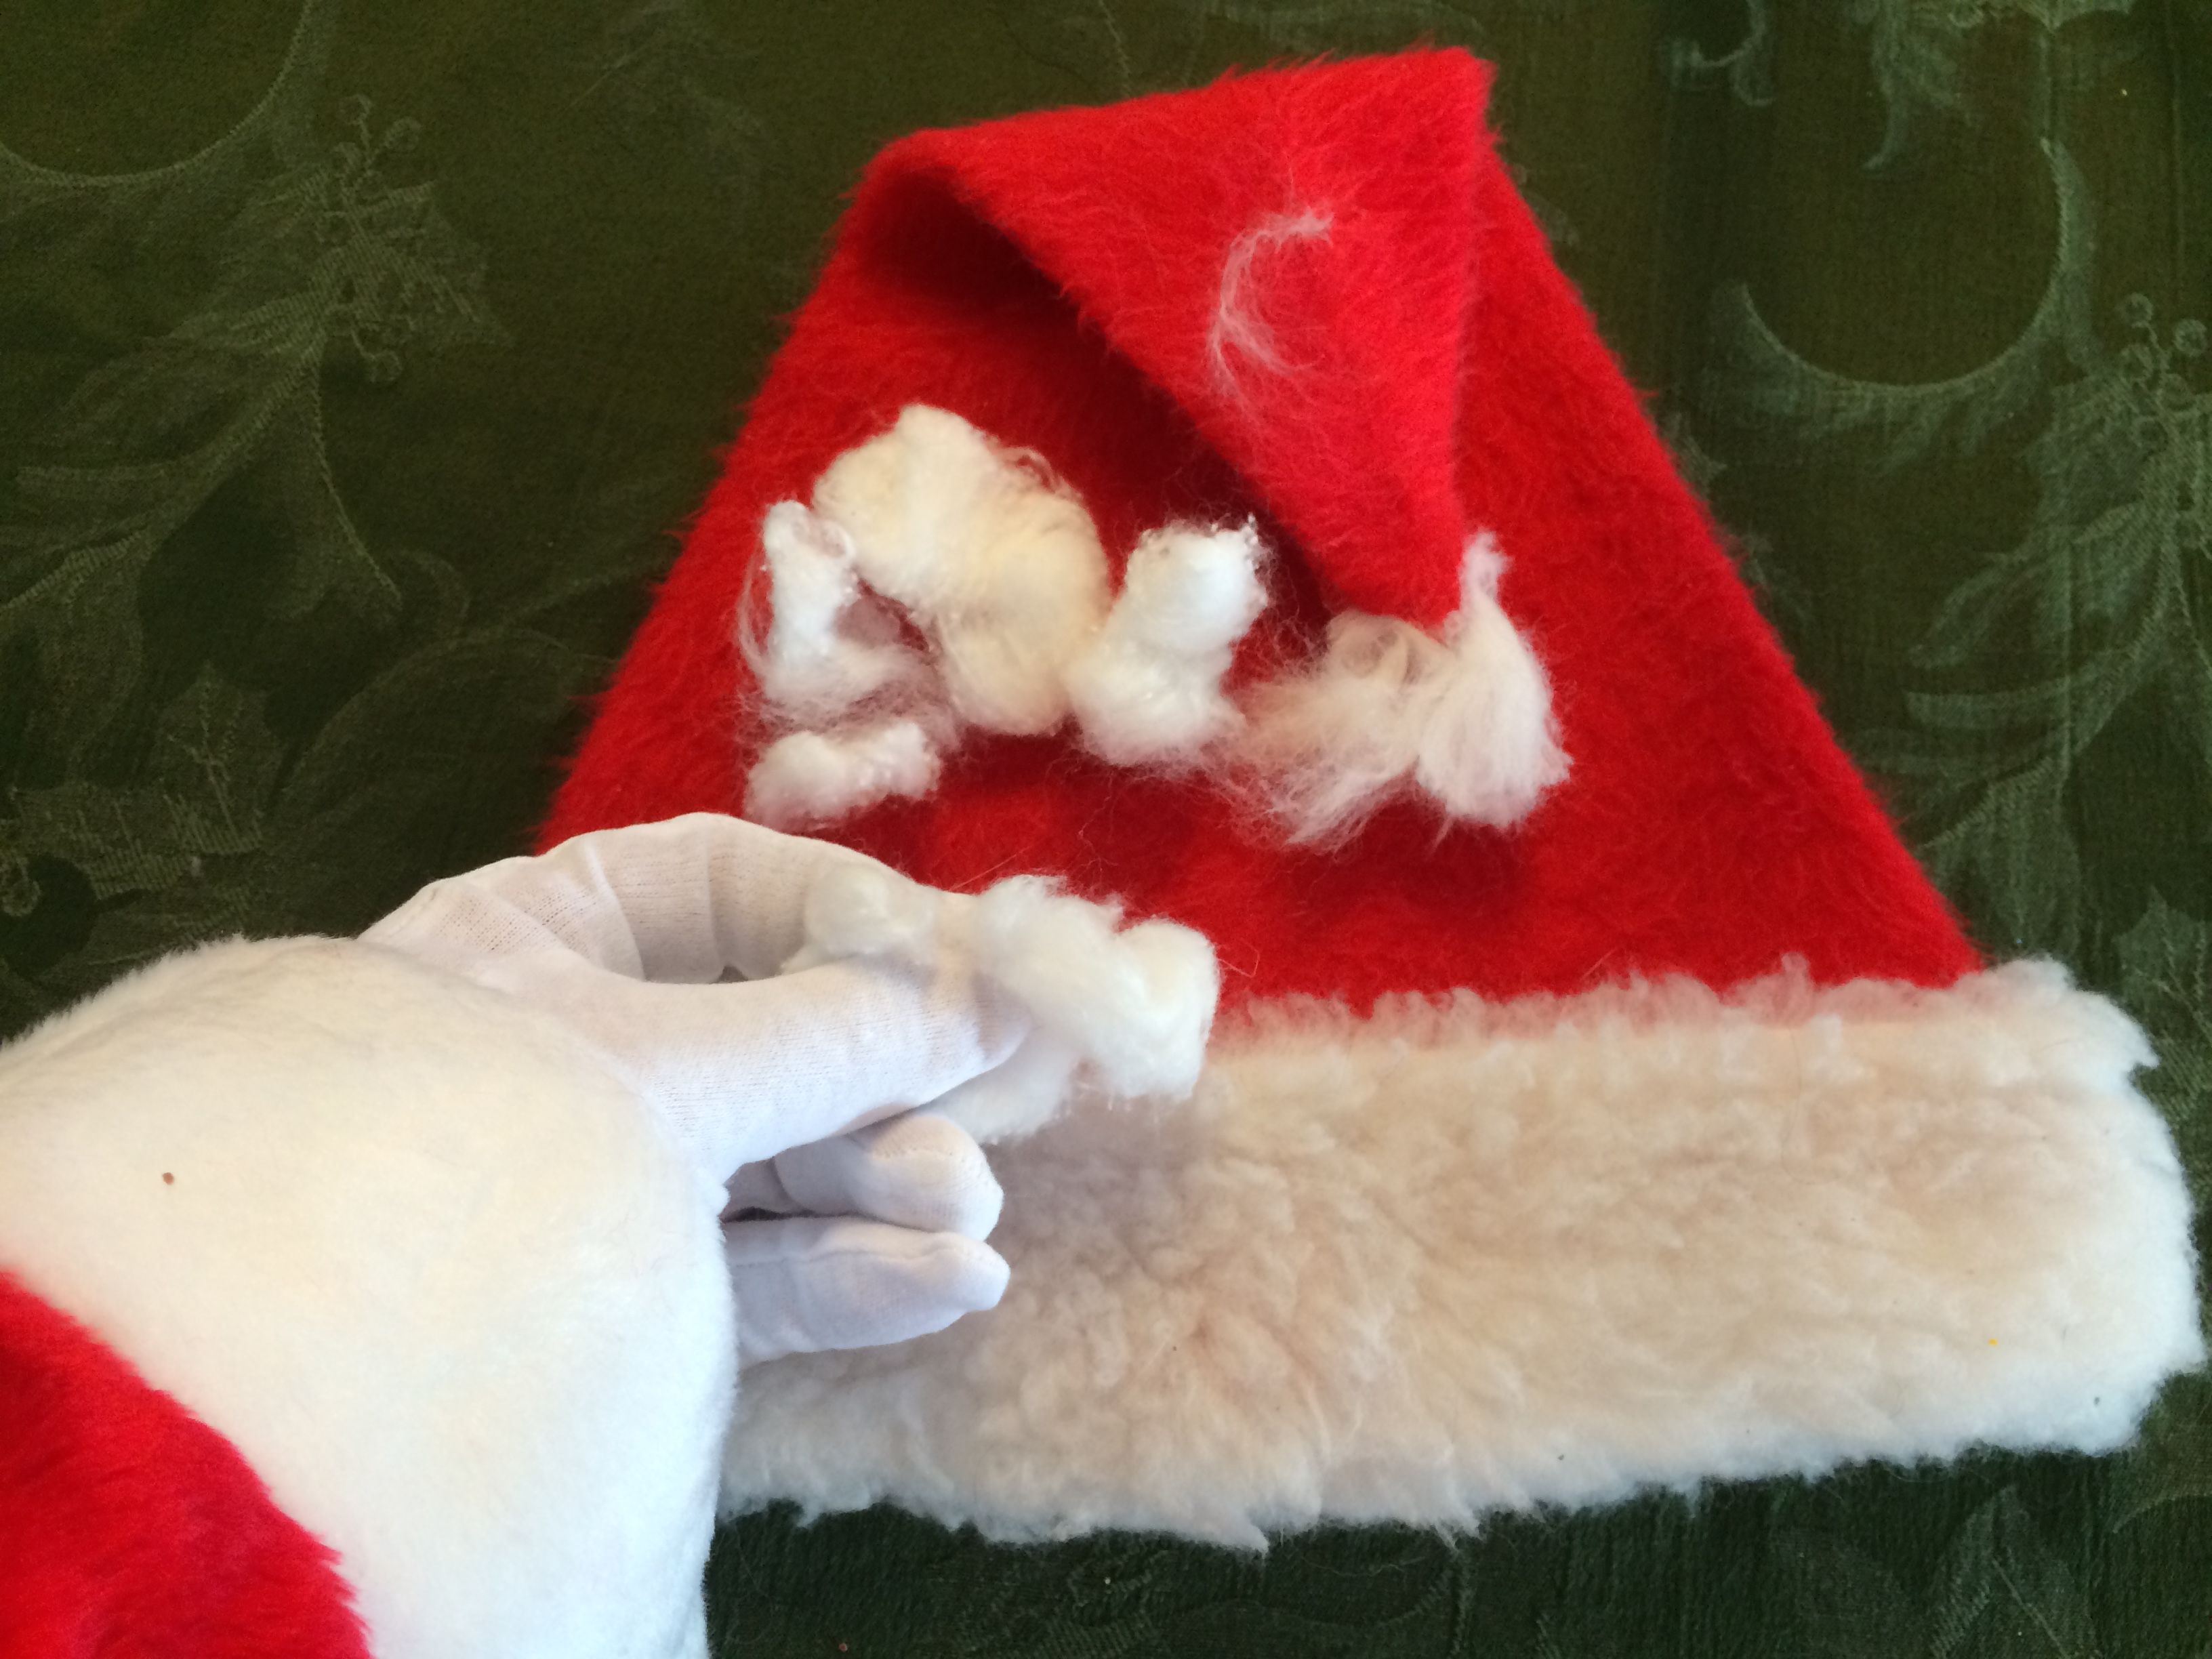 A cat ate Santa's hat